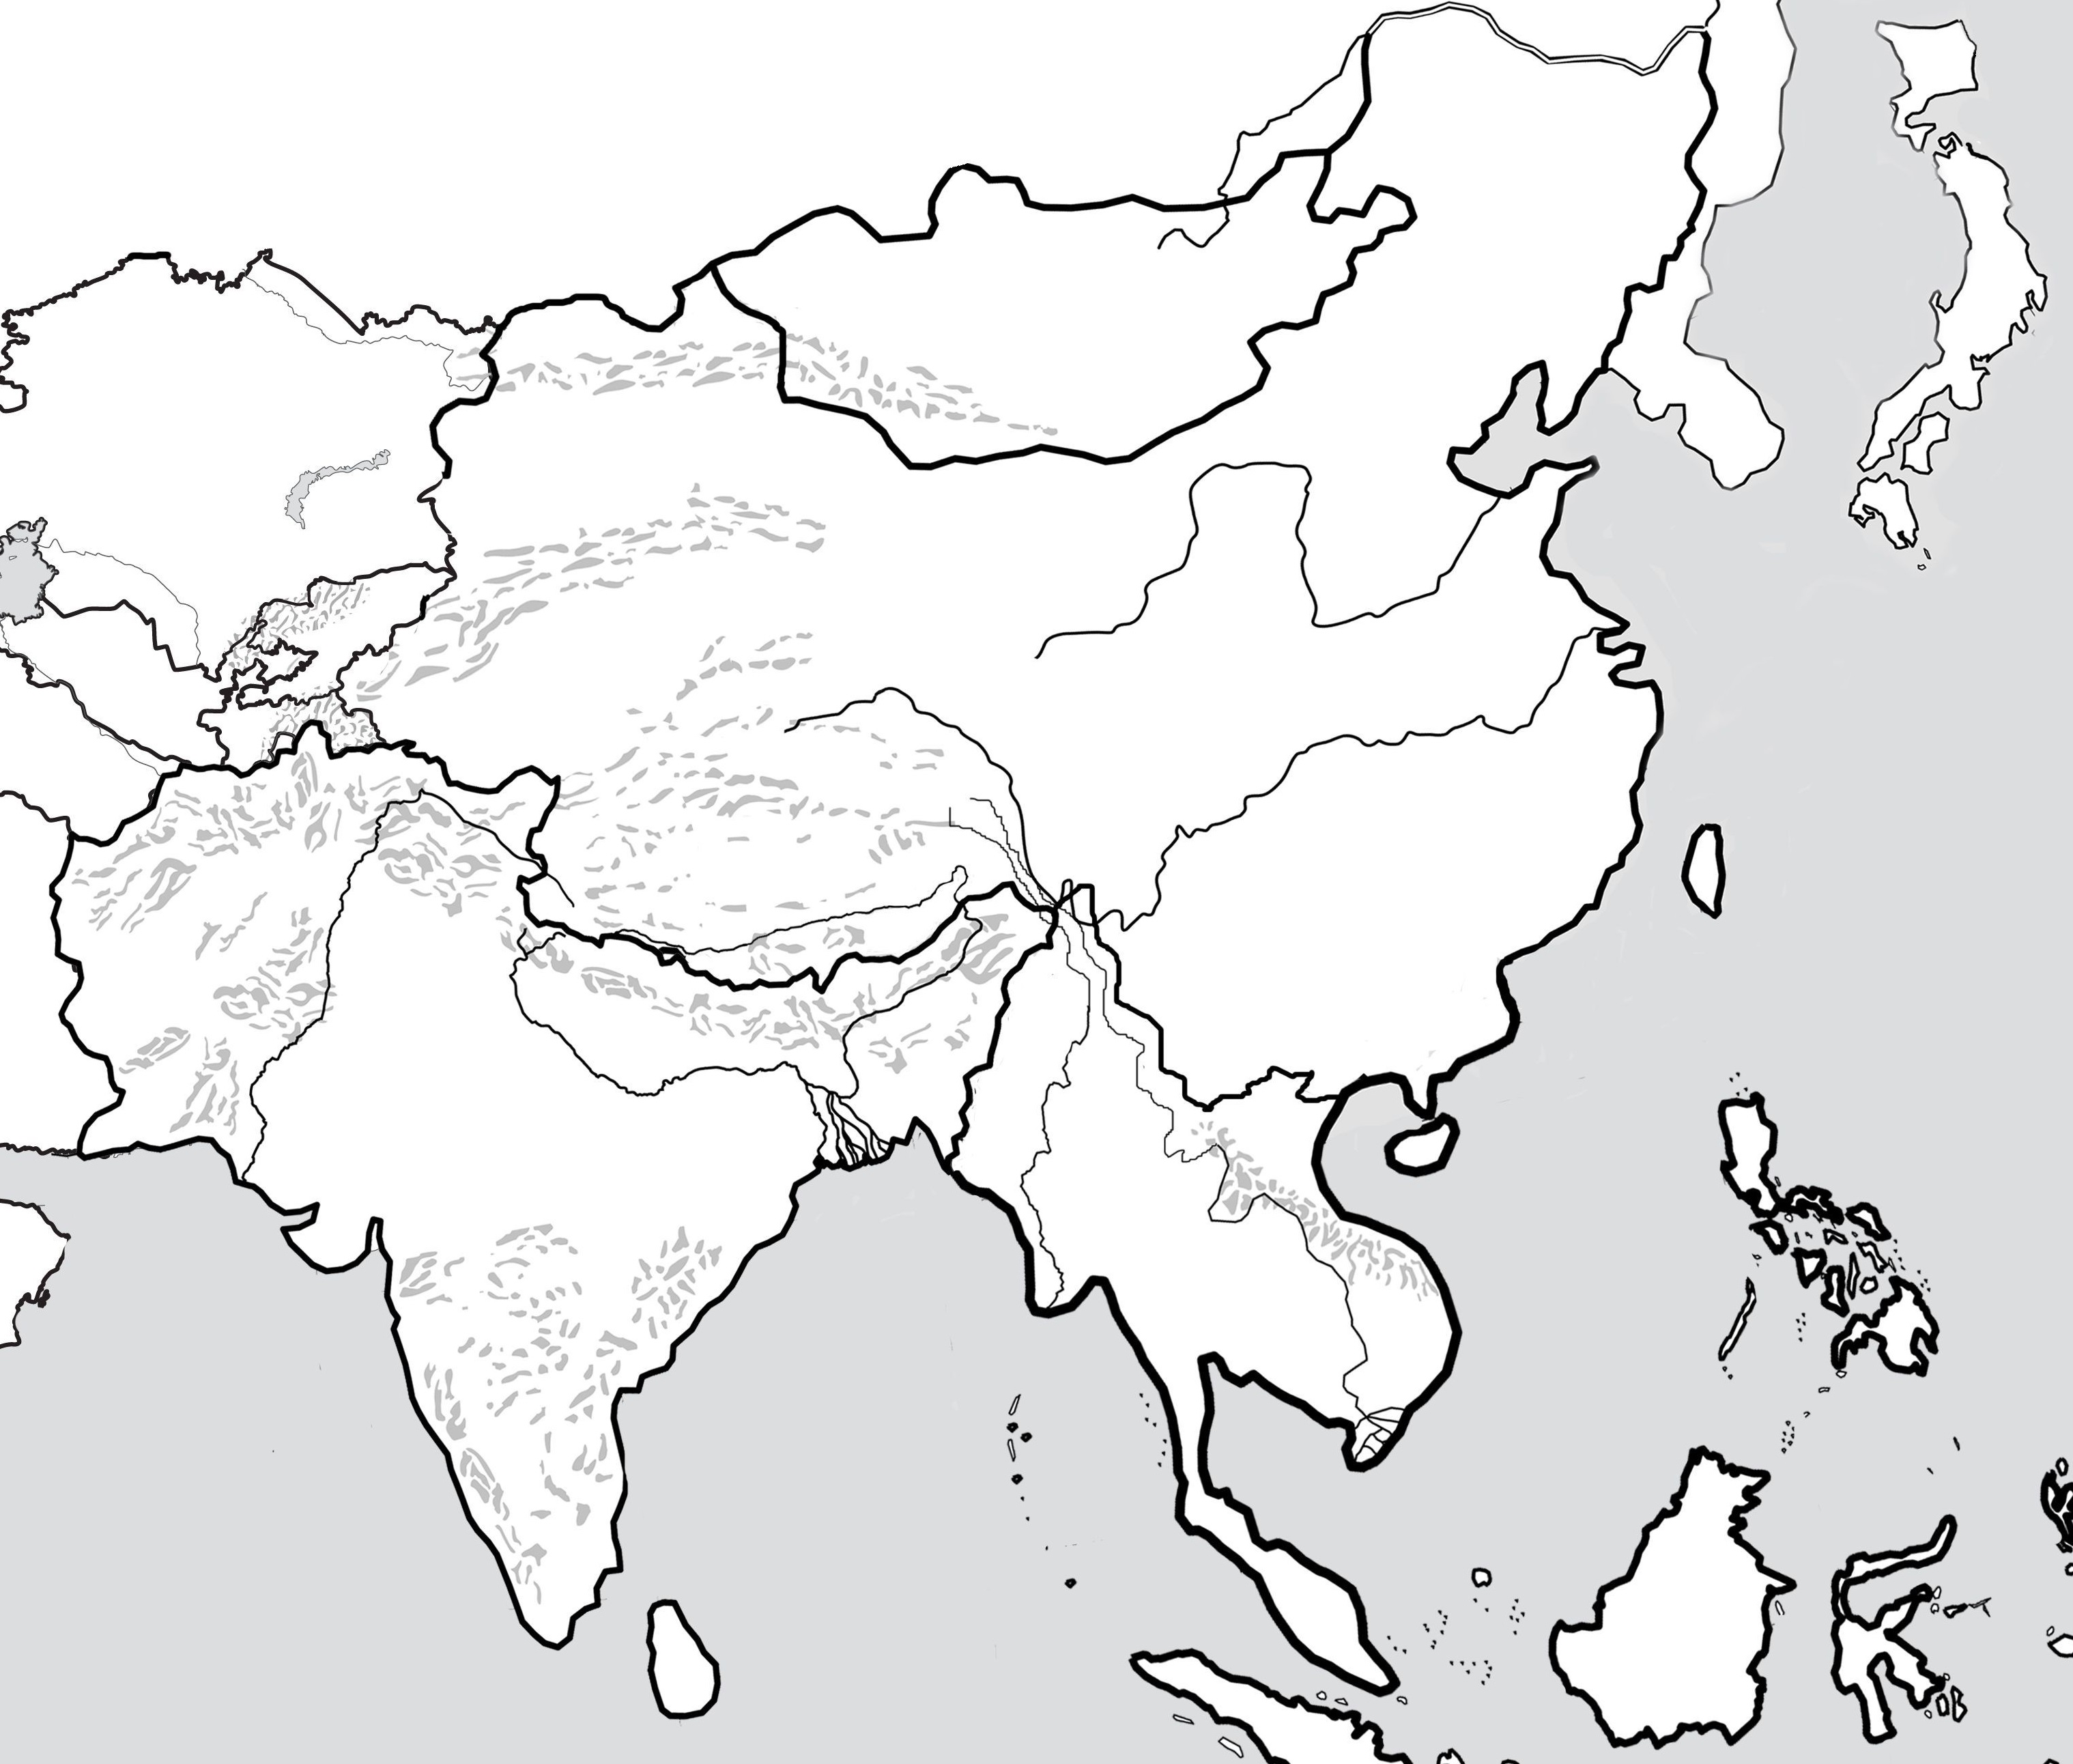 White asia. Карта зарубежной Азии пустая. Пустая карта Азии с границами стран. Политическая контурная карта Азии с границами государств.